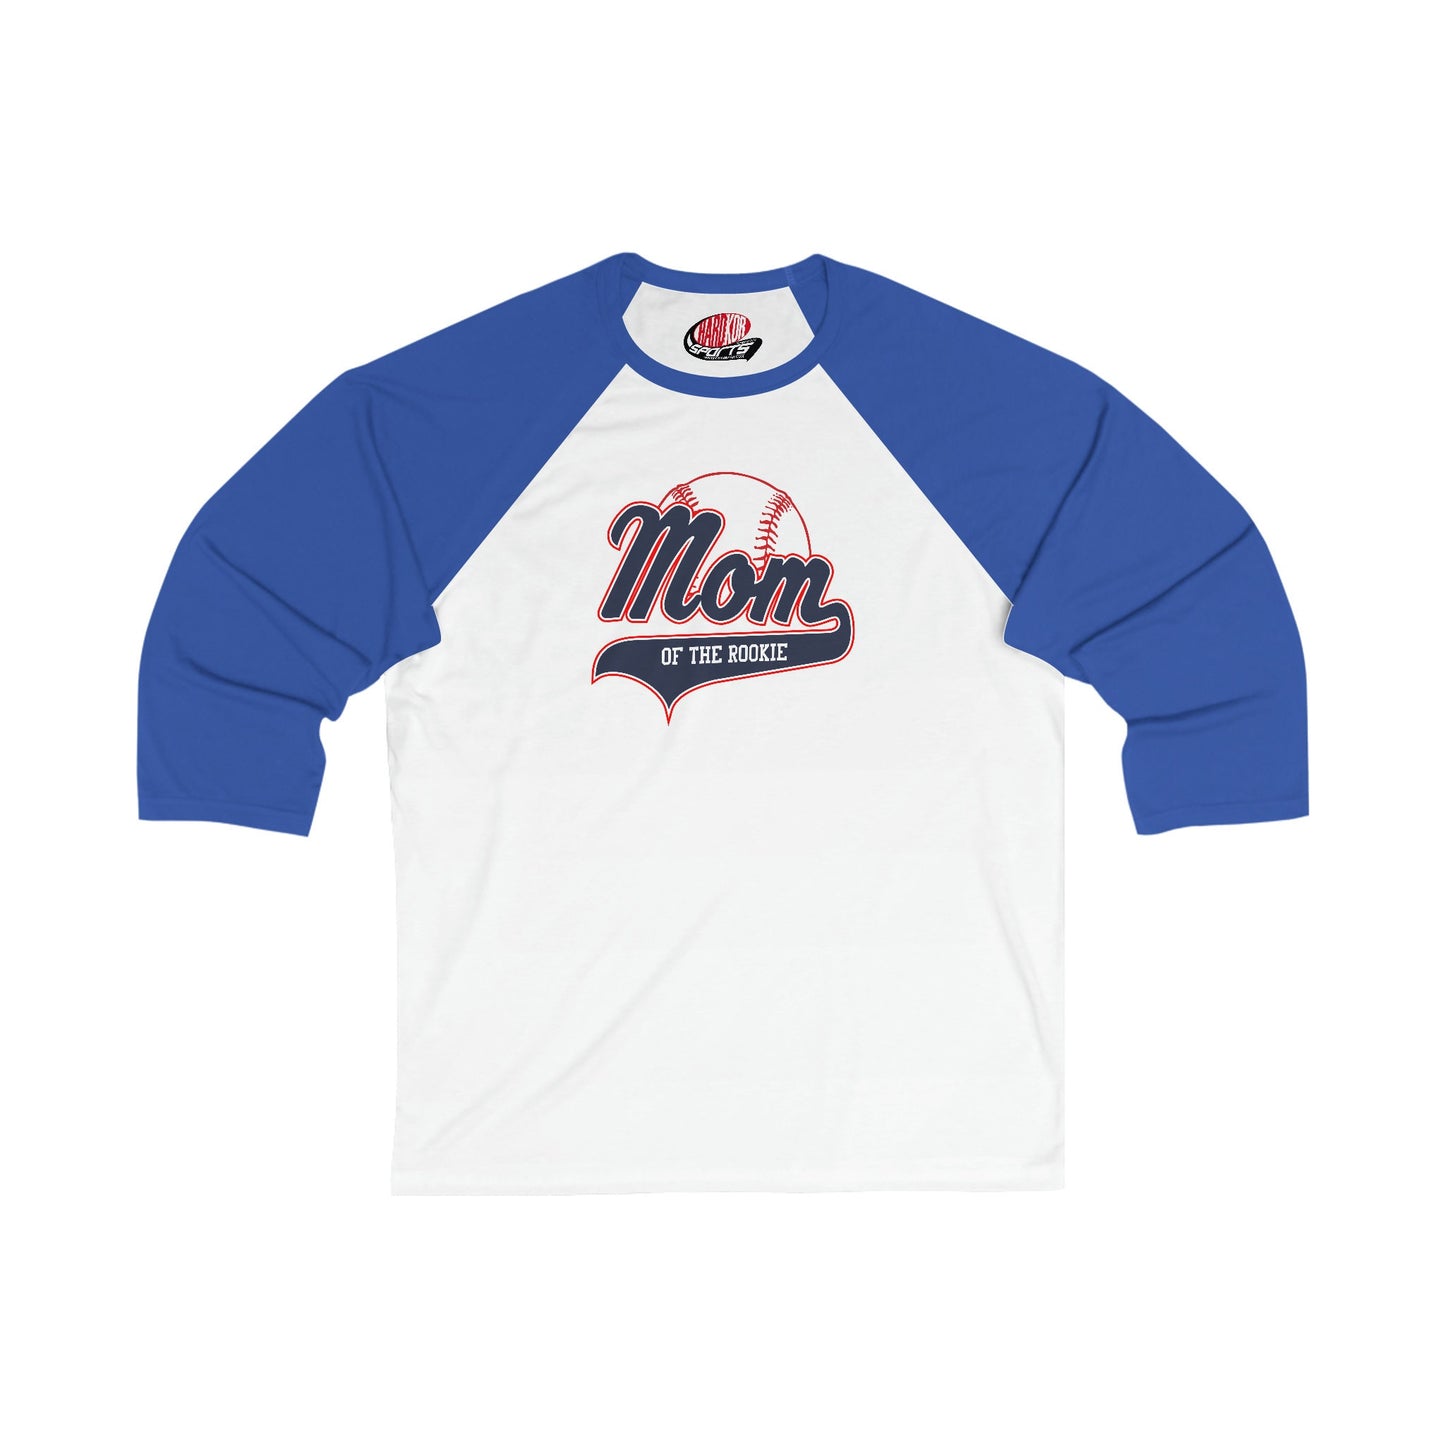 Mom of the Rookie, Slim Fit Unisex 3/4 Sleeve Baseball Tee, Customizable Baseball Shirt, Colorblock Raglan Sleeve, Your Name Number on back